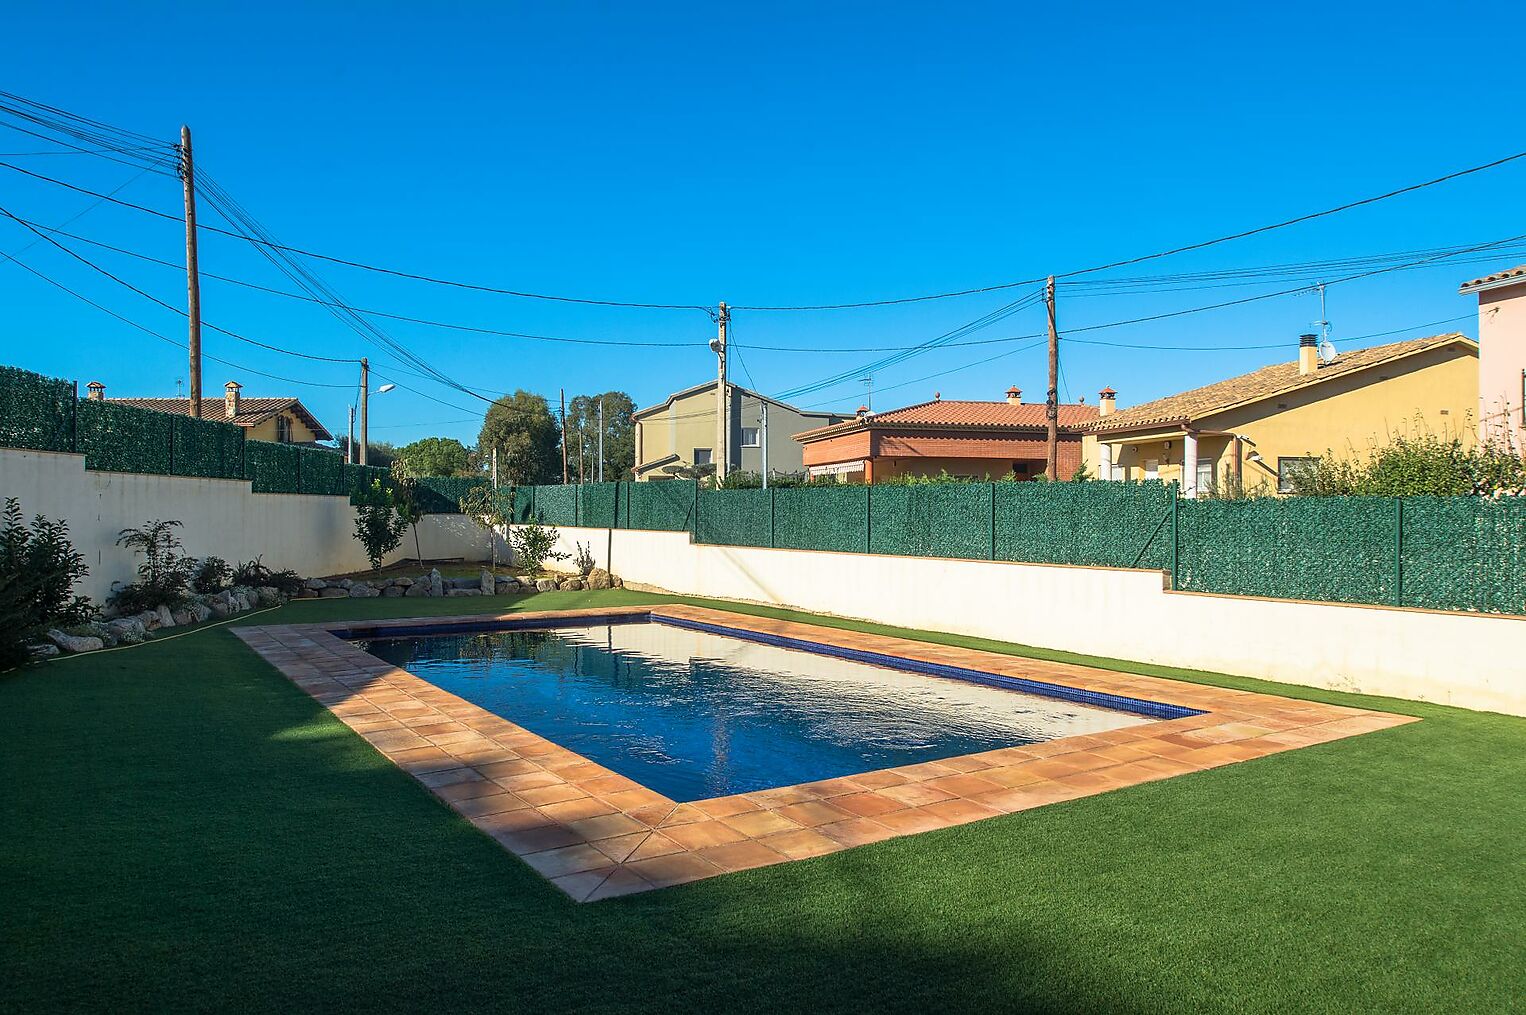 Superb Detached Villa with Pool in quiet location